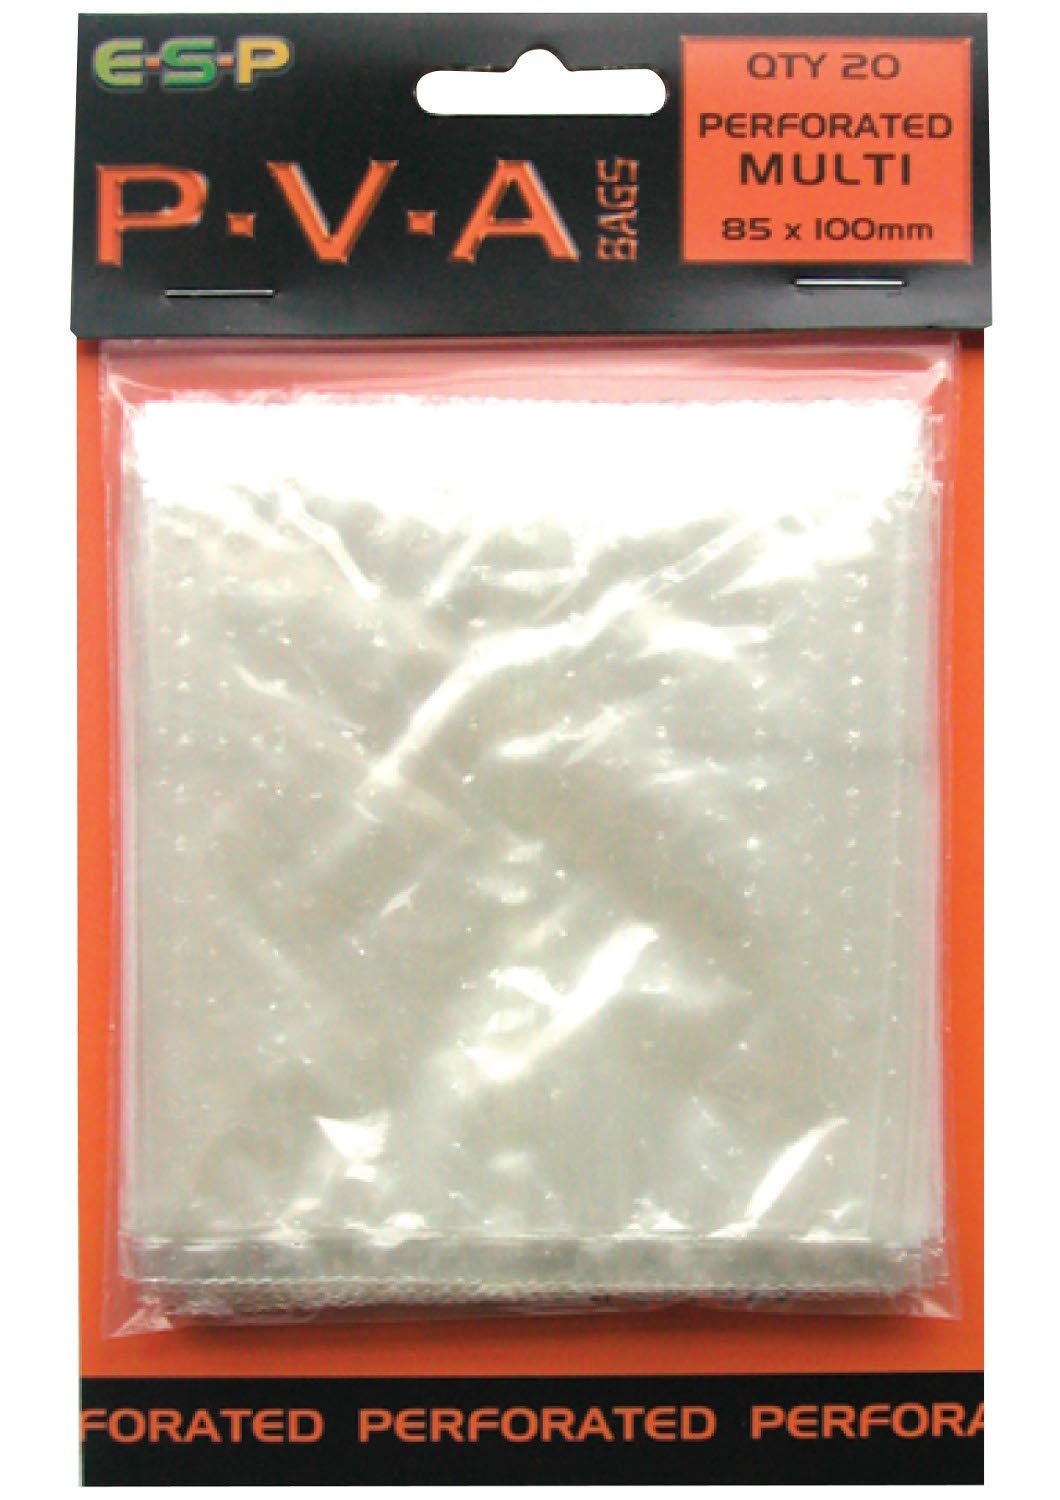 Пакеты растворимые перфорированные E-S-P  P.V.A. Perforated Bags - MULTI / 85x100mm / 20шт.